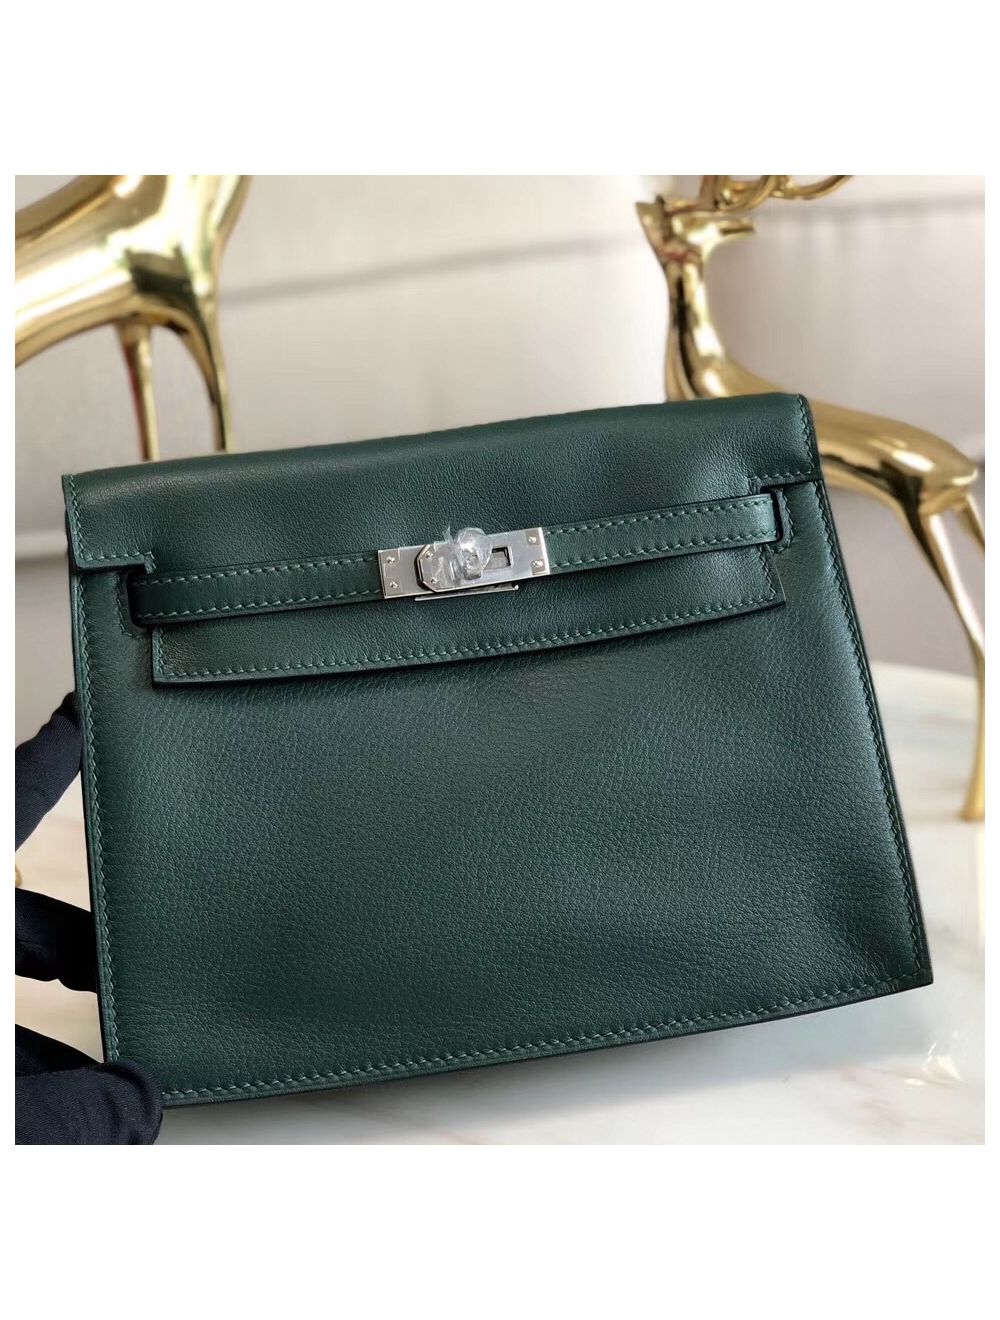 Hermès - Authenticated Kelly Danse Handbag - Leather Green Plain for Women, Never Worn